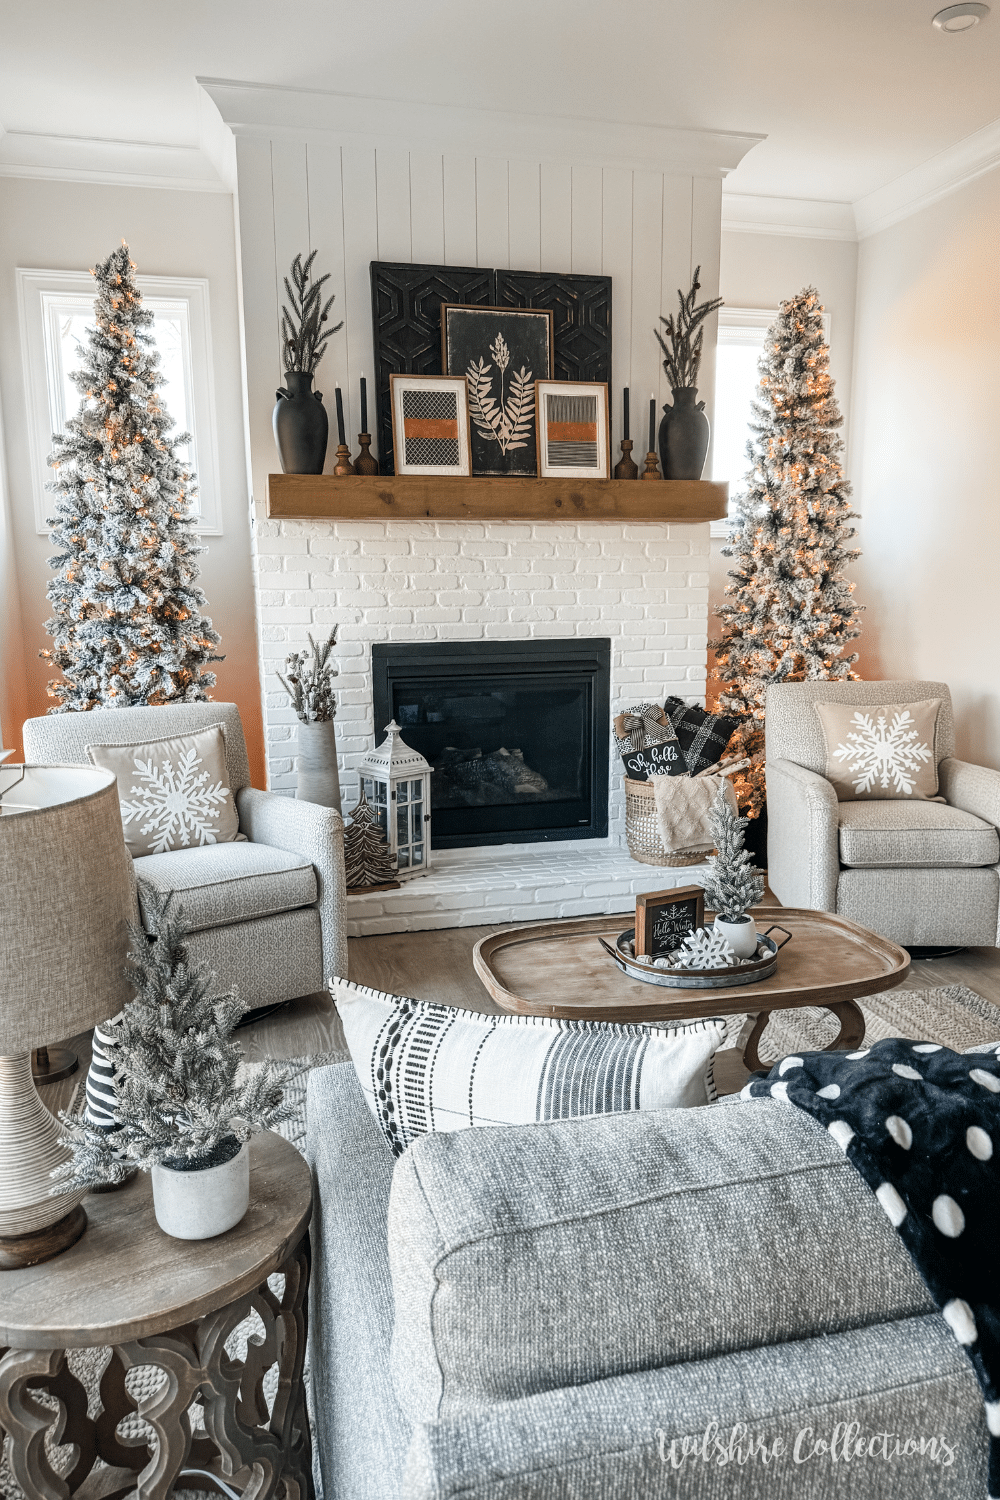 Simple winter decorating ideas